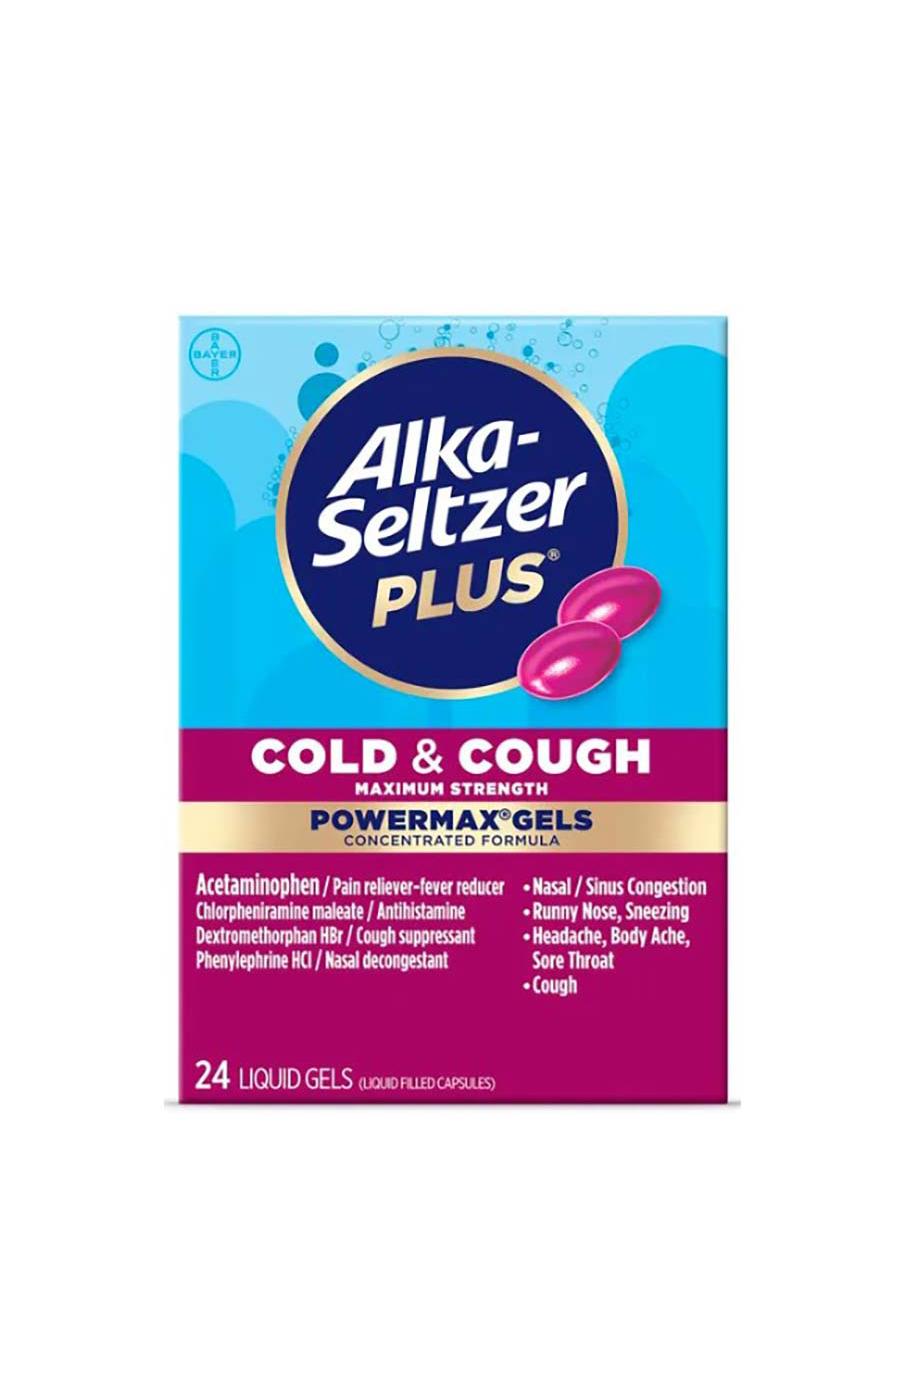 Alka-Seltzer Plus Cold & Cough PowerMax Gels; image 1 of 6